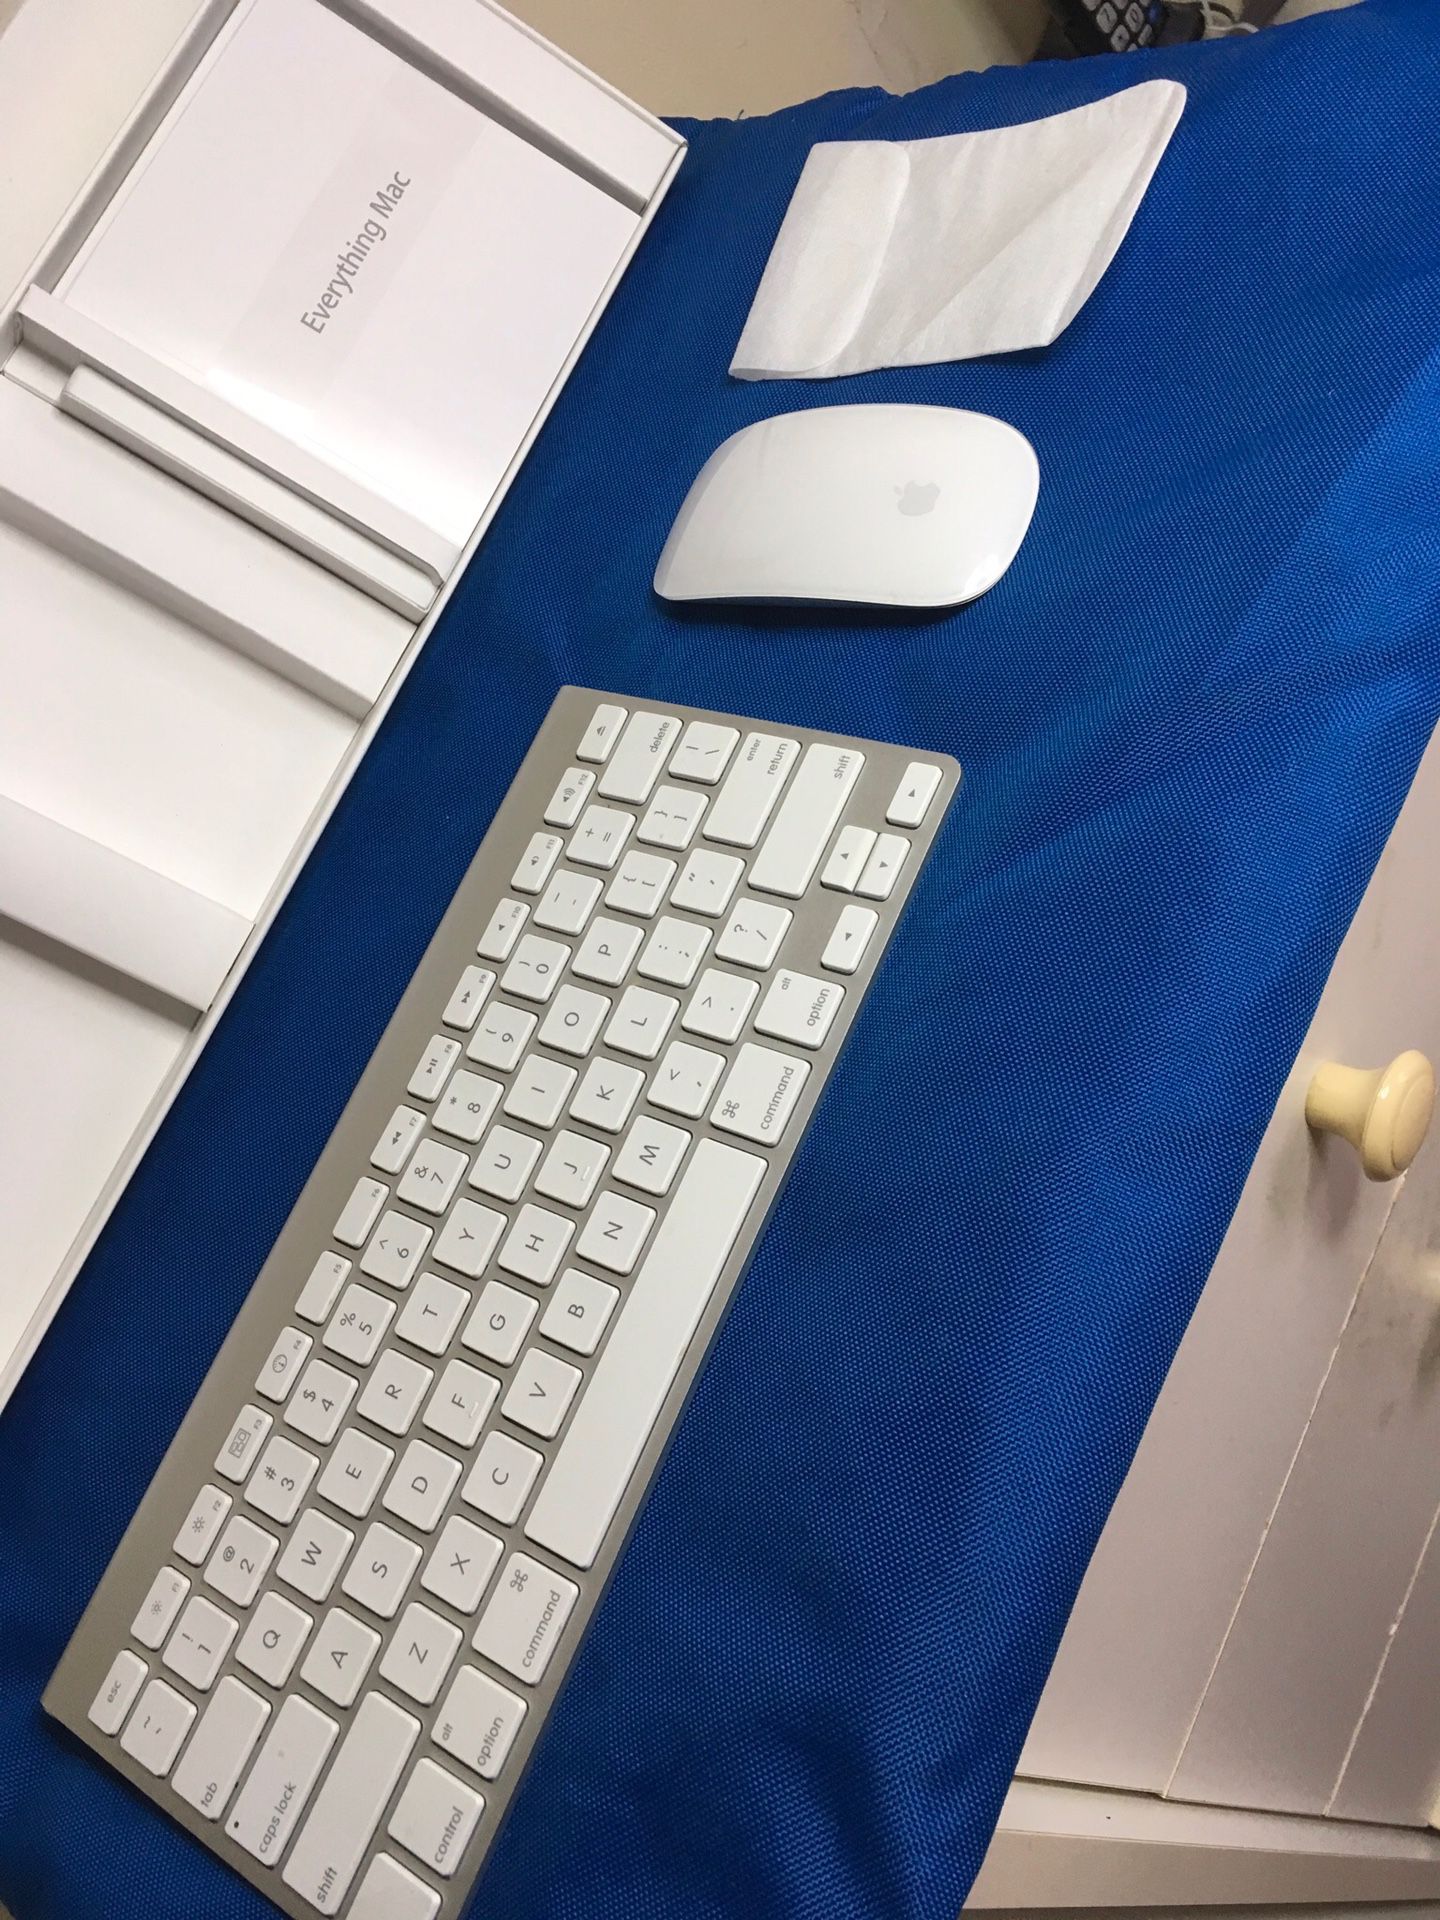 Apple mouse keyboard sets